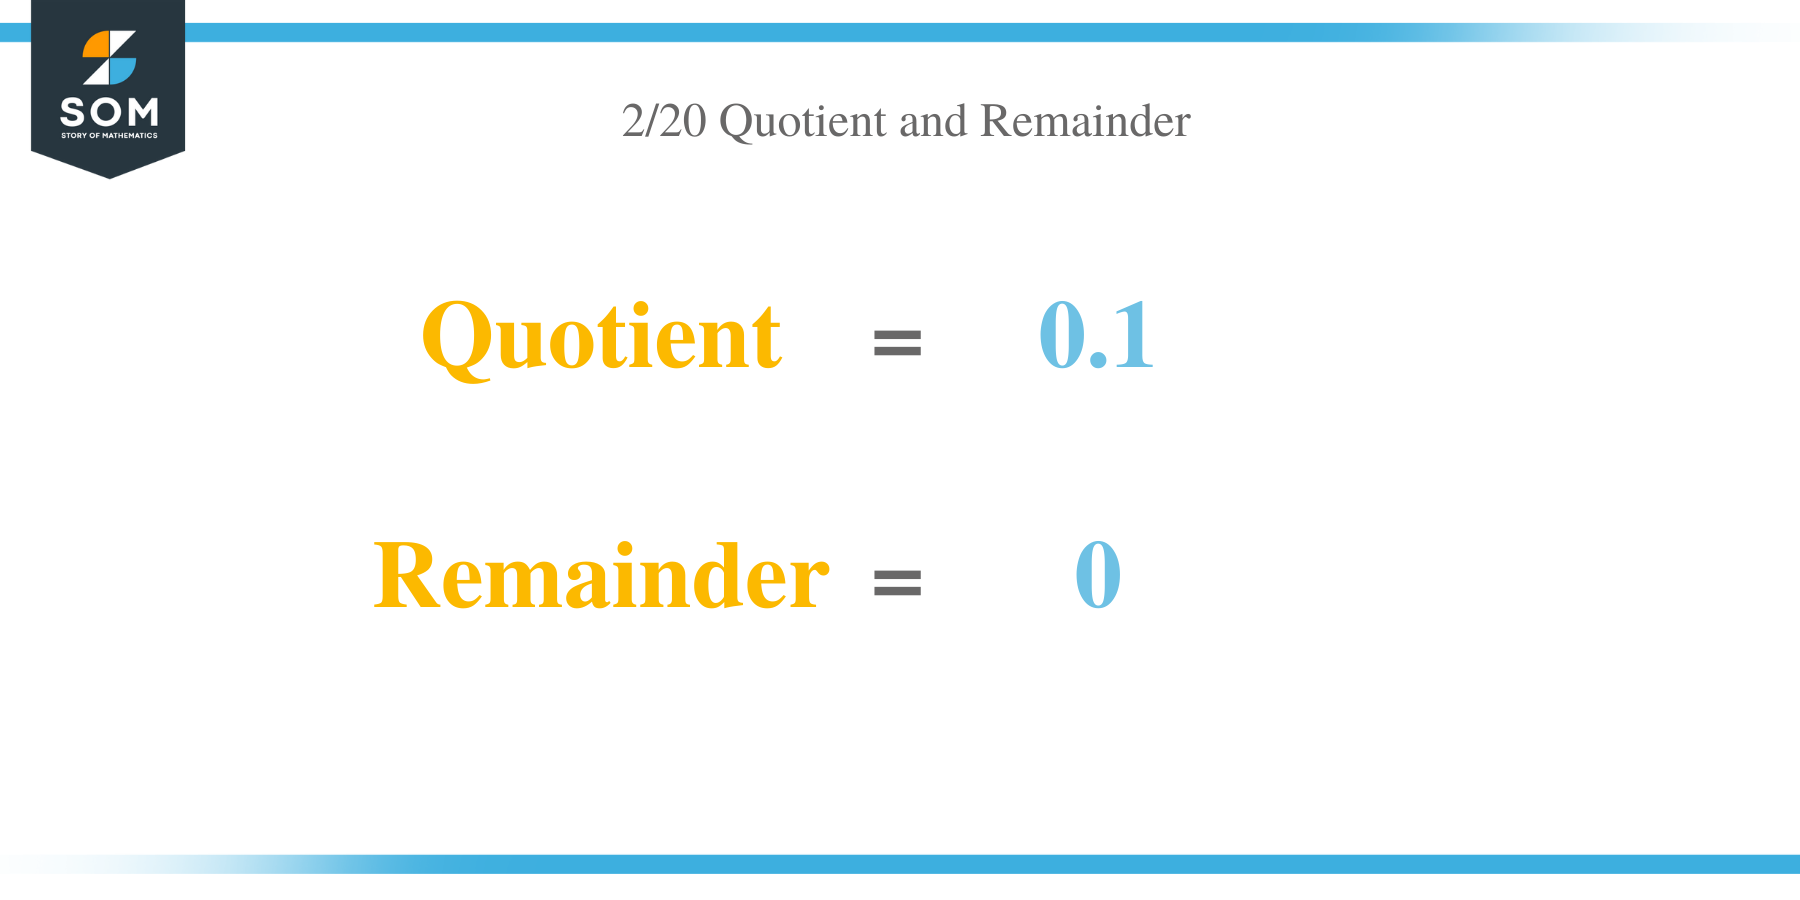 Quotient and Remainder of 2 per 20 1